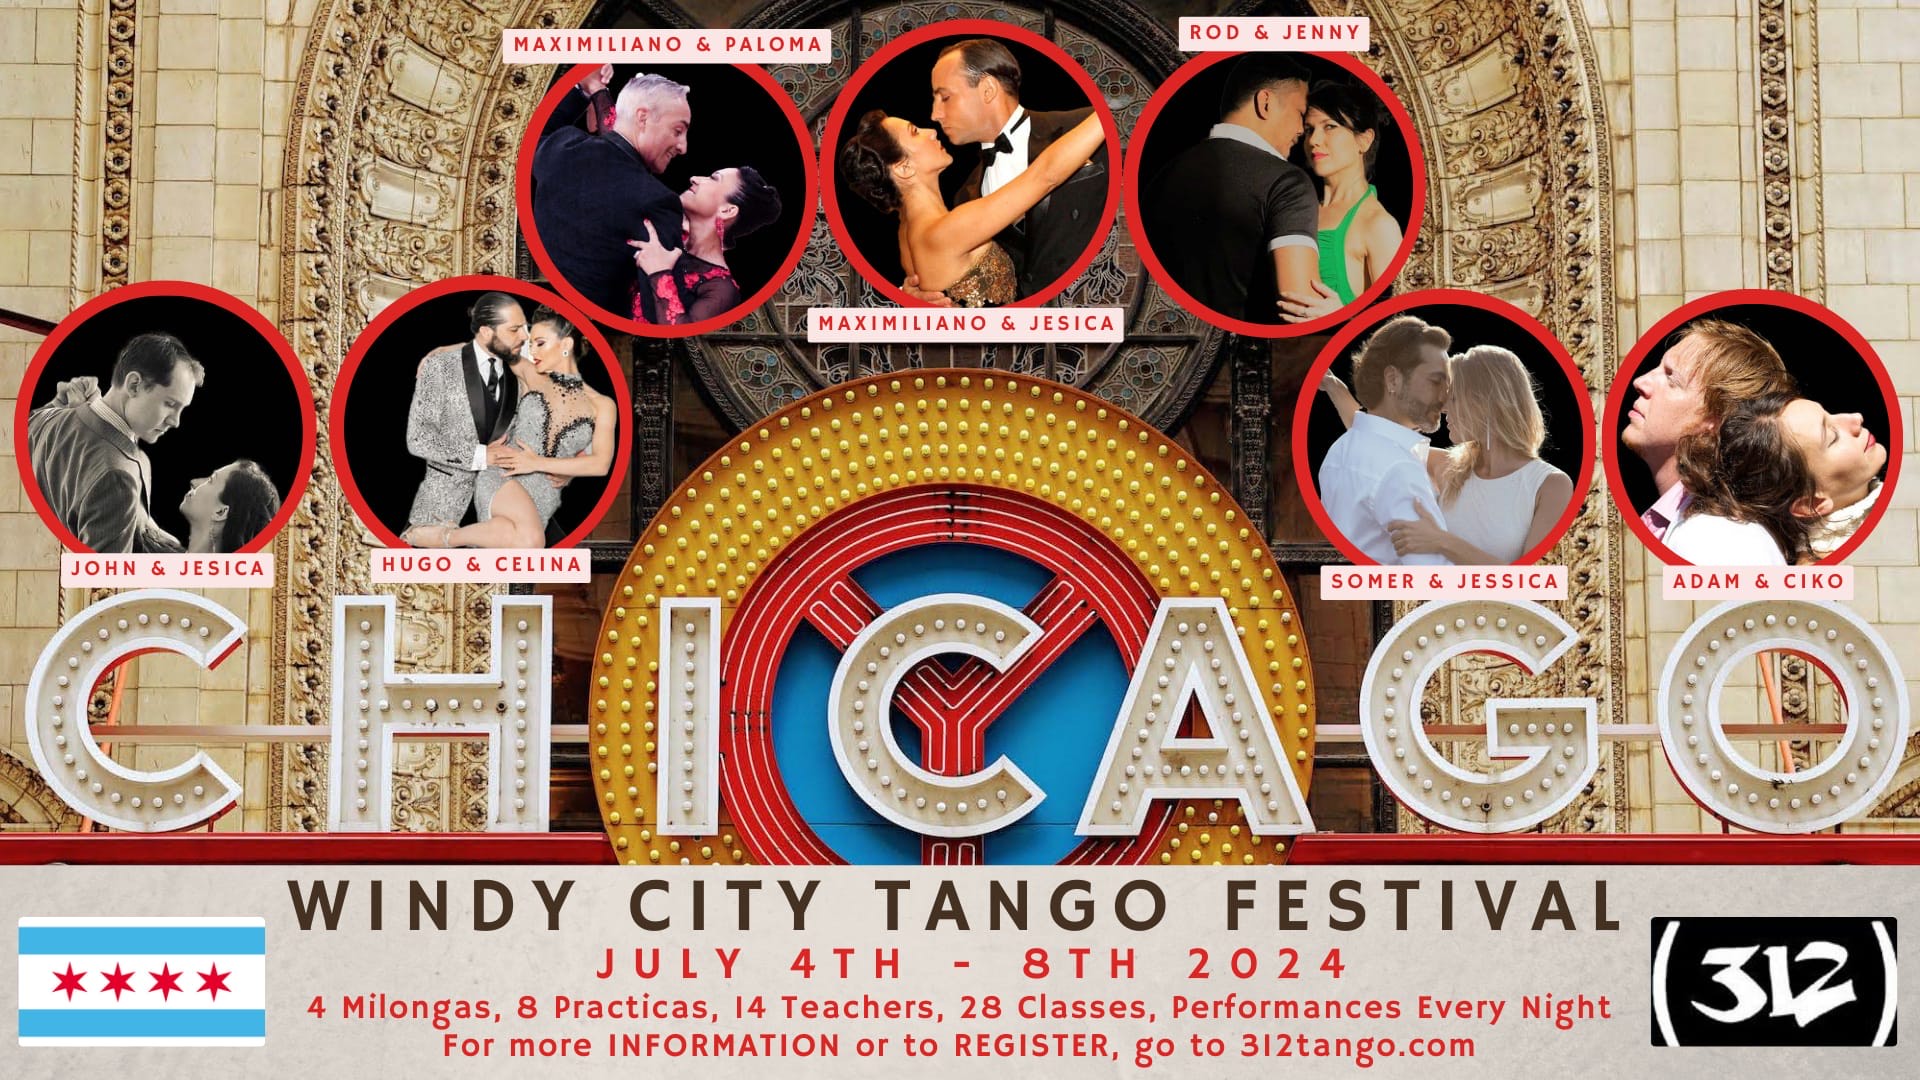 WINDY CITY TANGO FESTIVAL 312 Tango